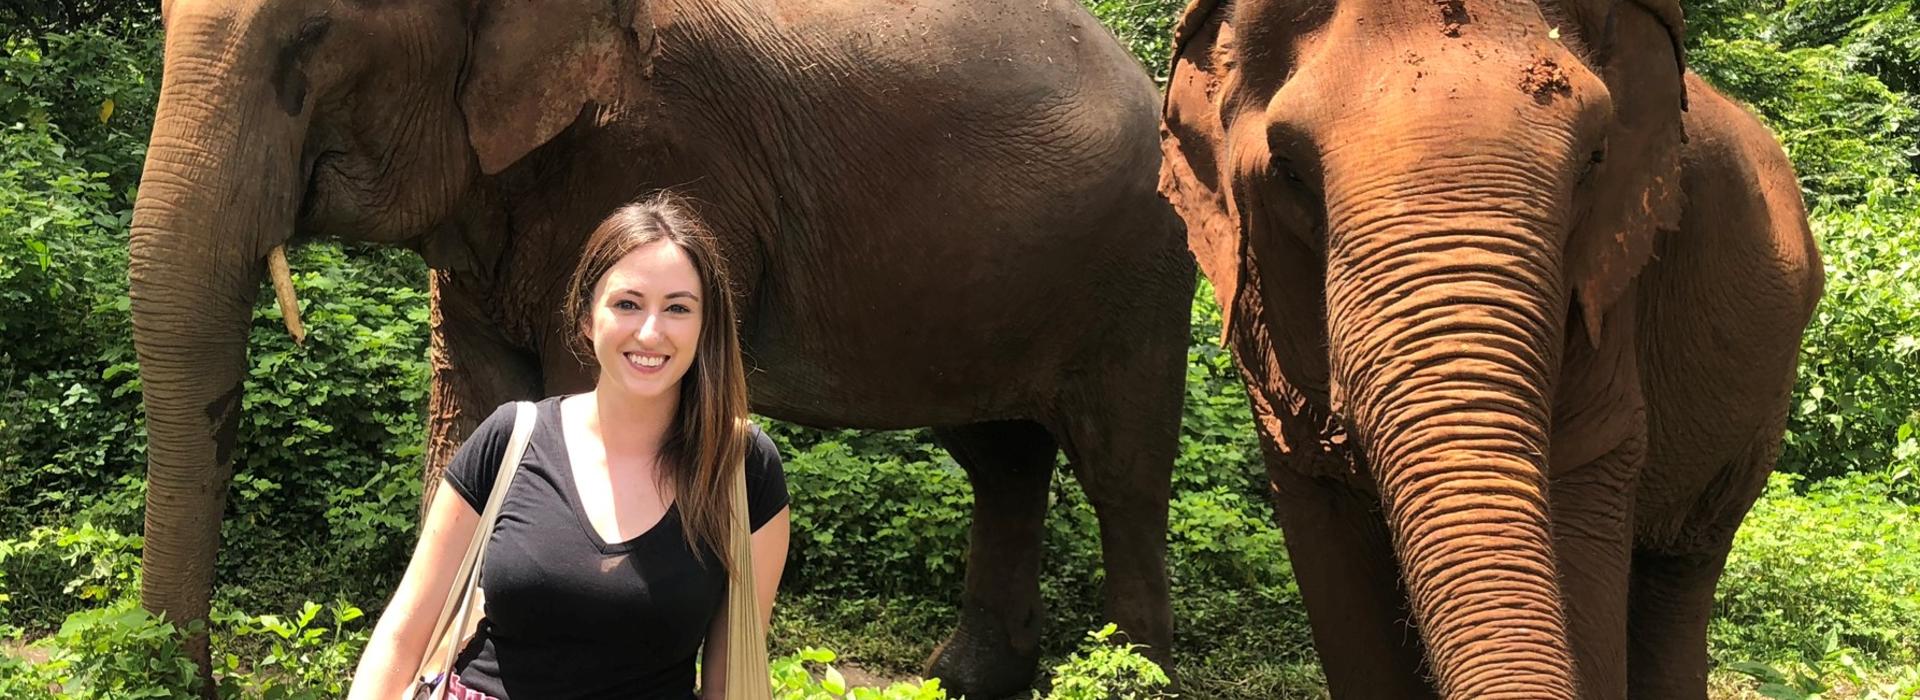 Courtney Eskridge with elephants